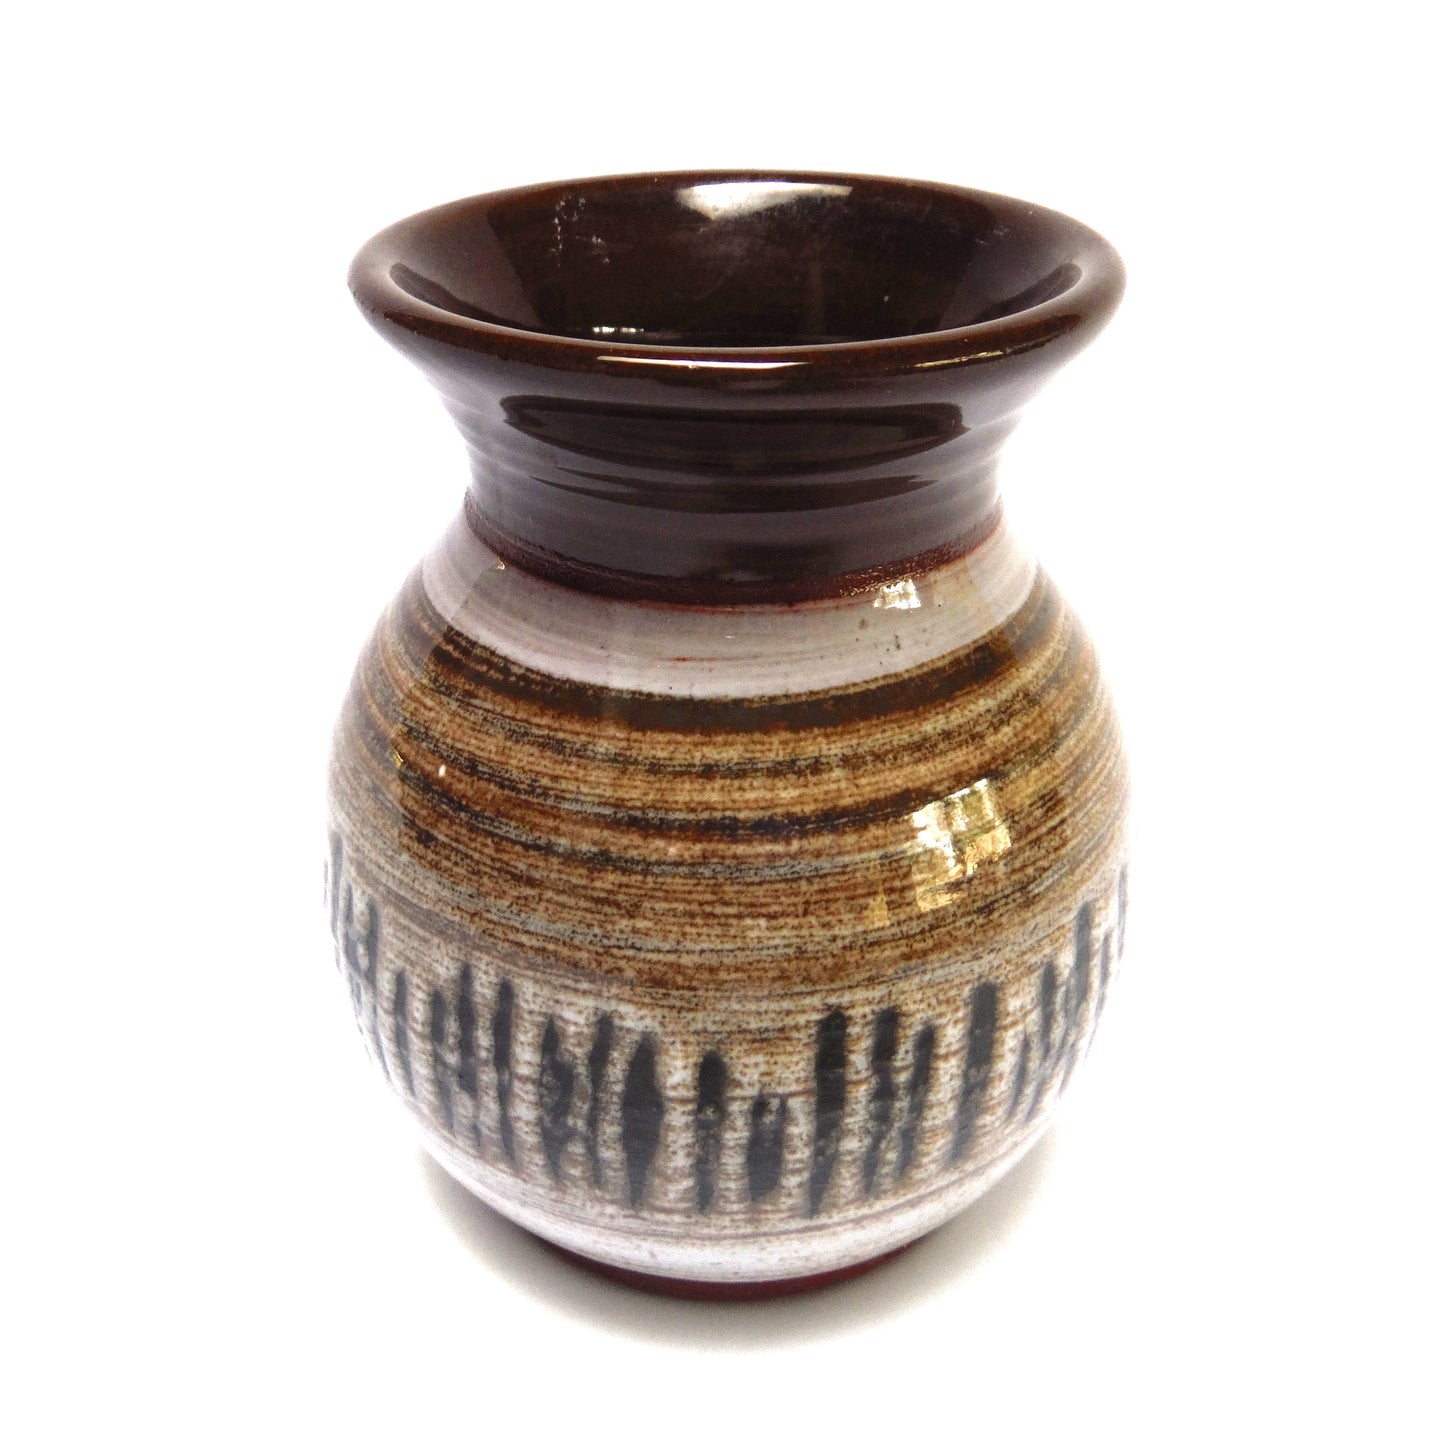 Vintage Miniature Vase, Brown and Beige Glazed with Artist Signature